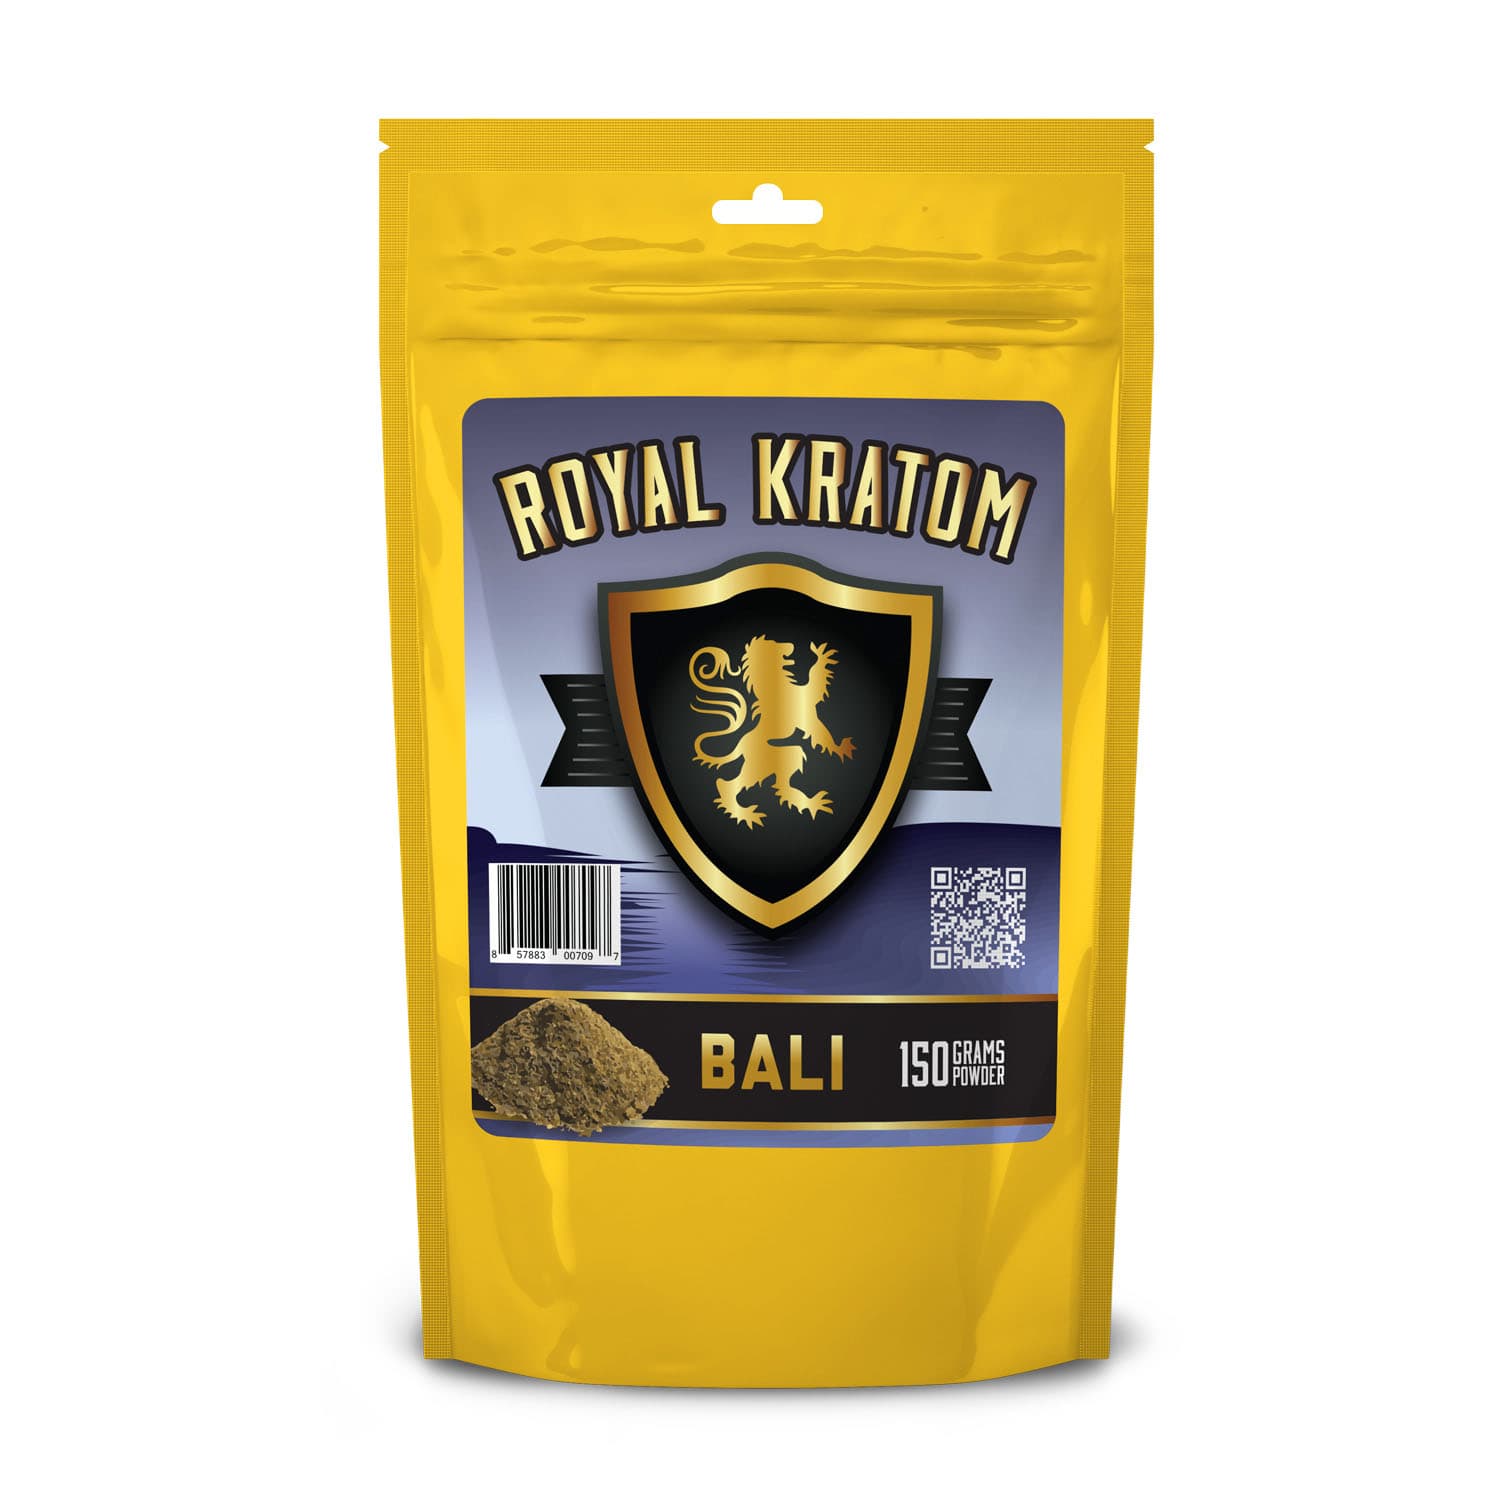 Royal Kratom Bali Kratom Powder 150 grams package